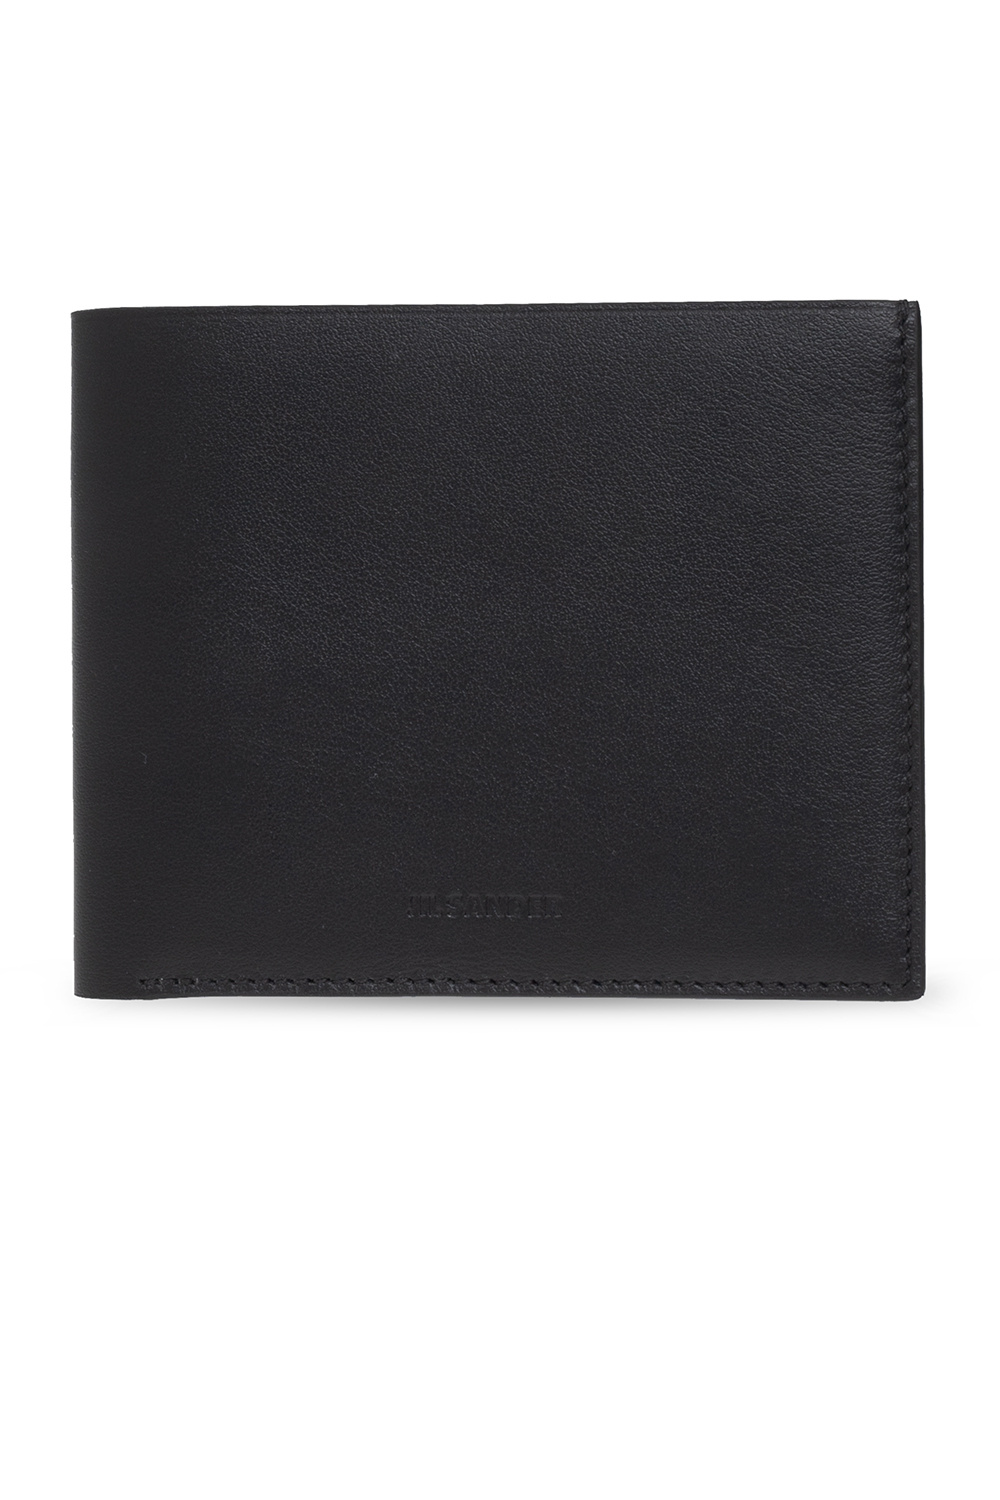 JIL SANDER Leather wallet with logo